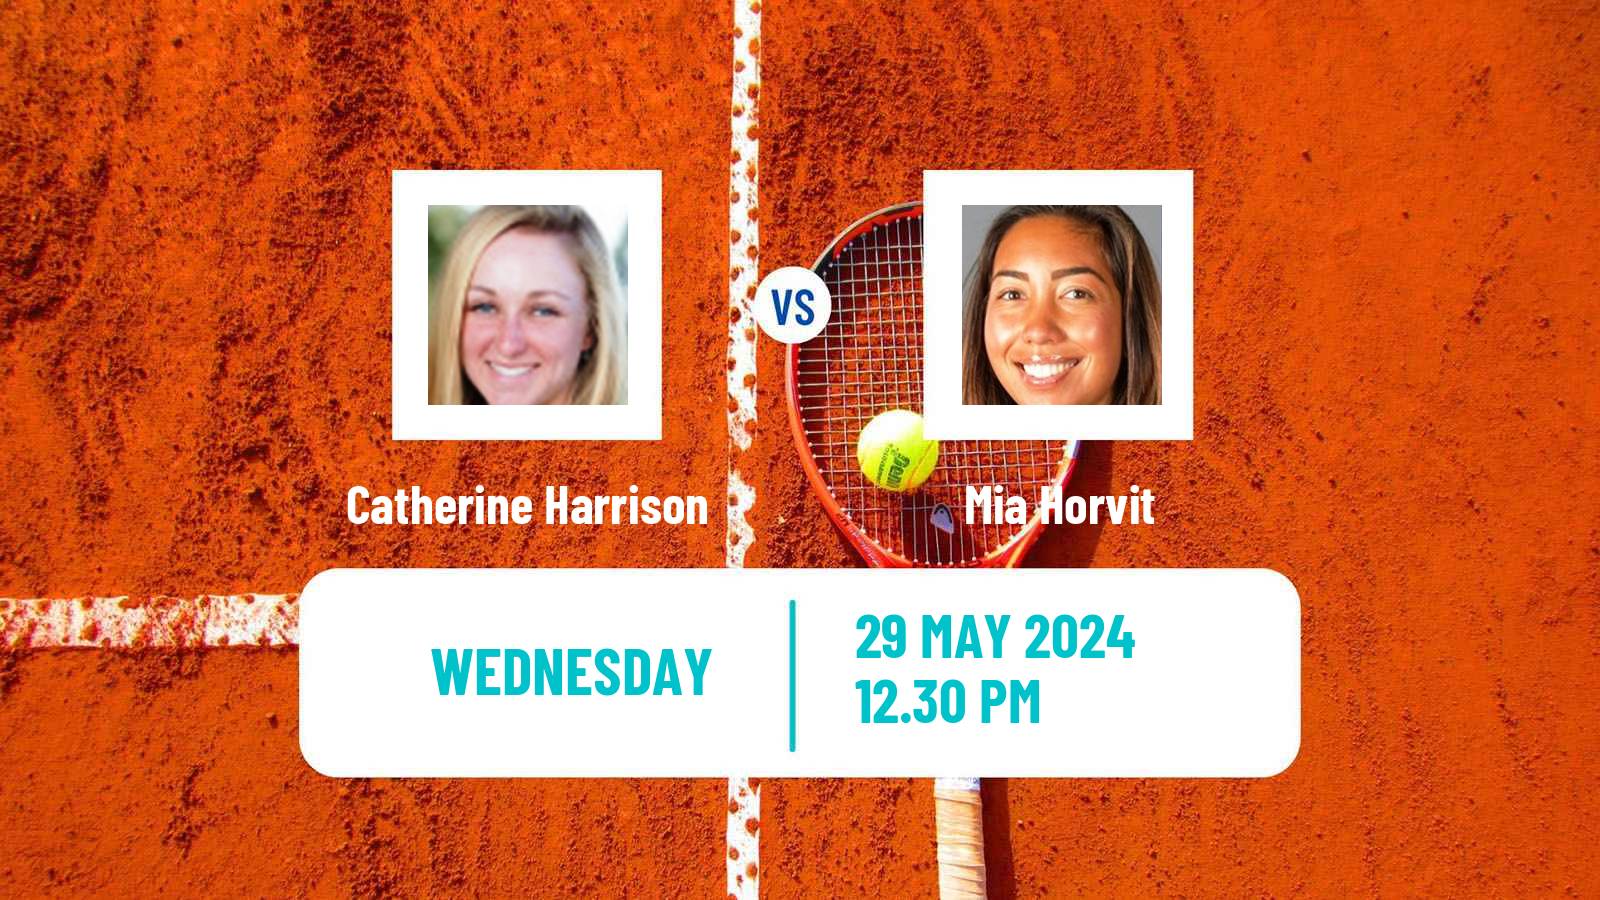 Tennis ITF W35 Santo Domingo 4 Women Catherine Harrison - Mia Horvit